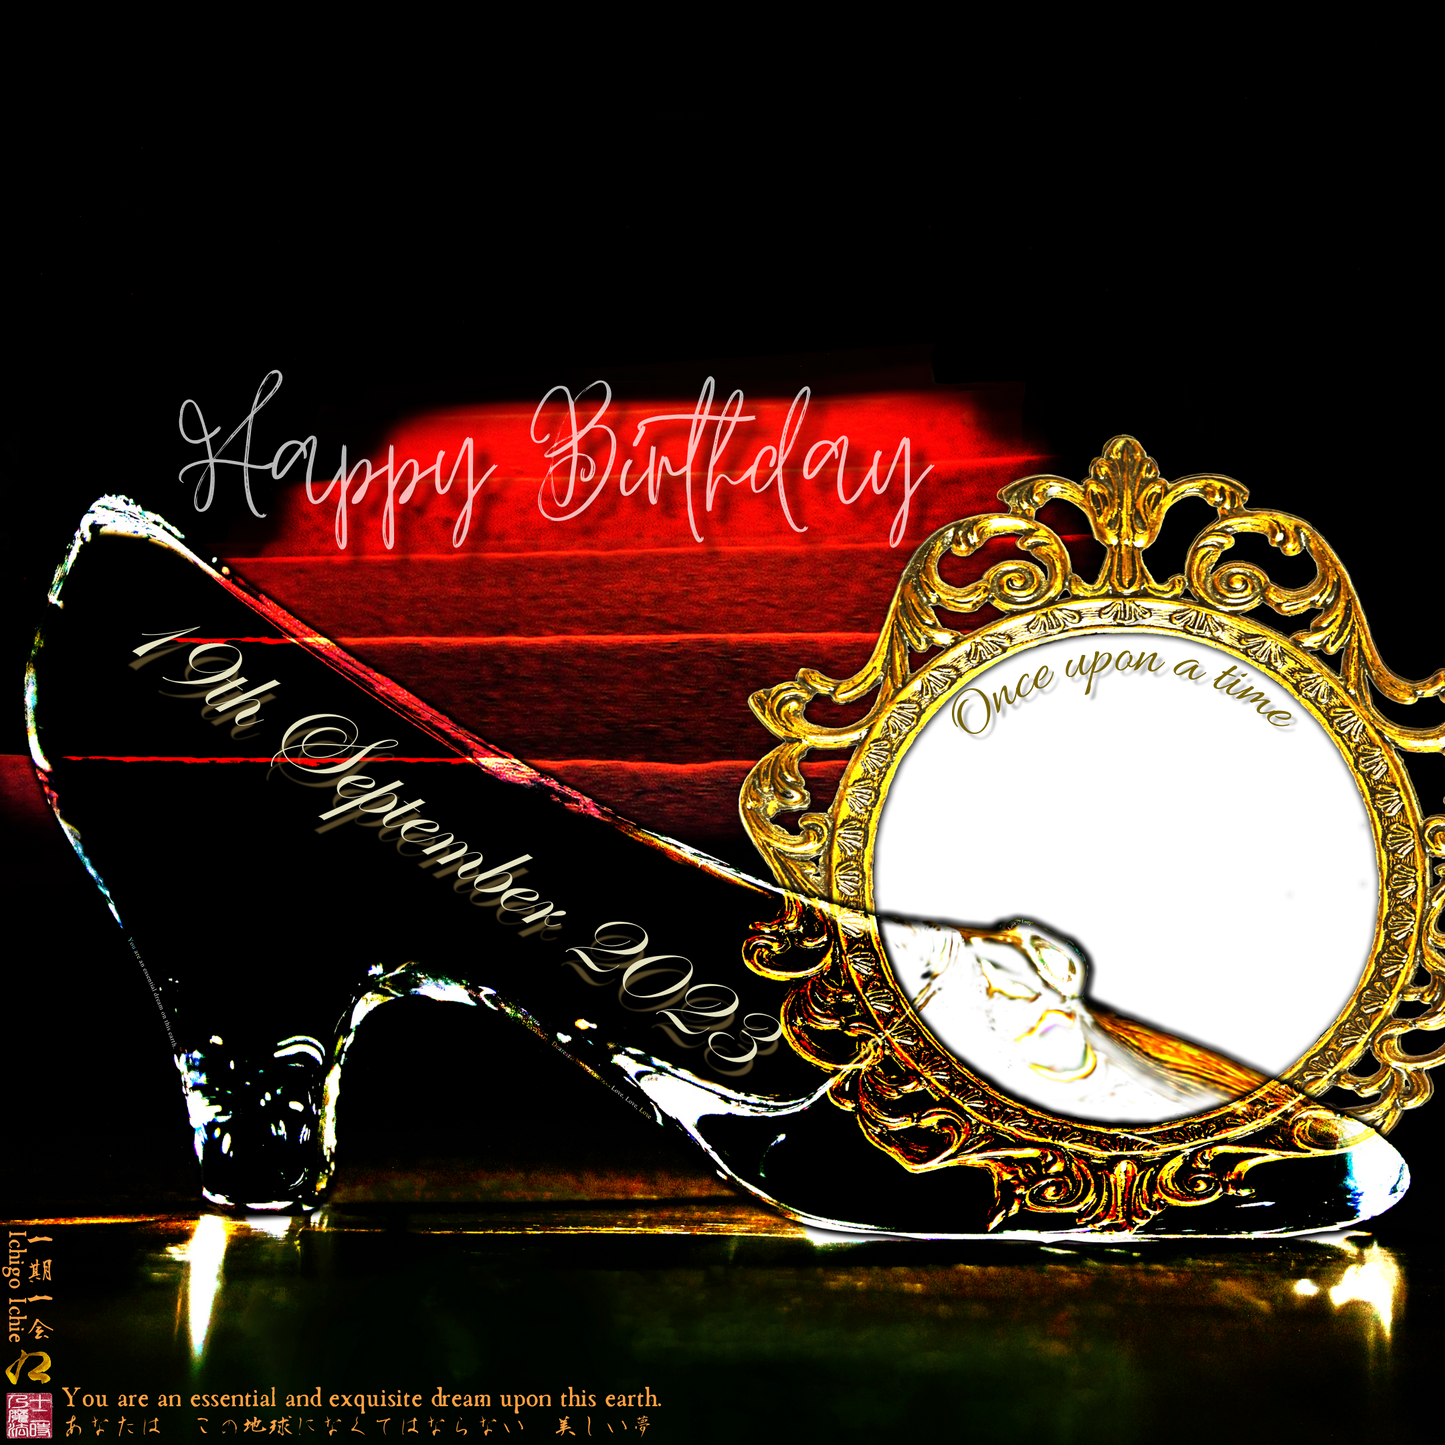 Happy Birthday Glass Slipper "Ichigo Ichie" 19th September 2023 the Right (1-of-1) NFT Art